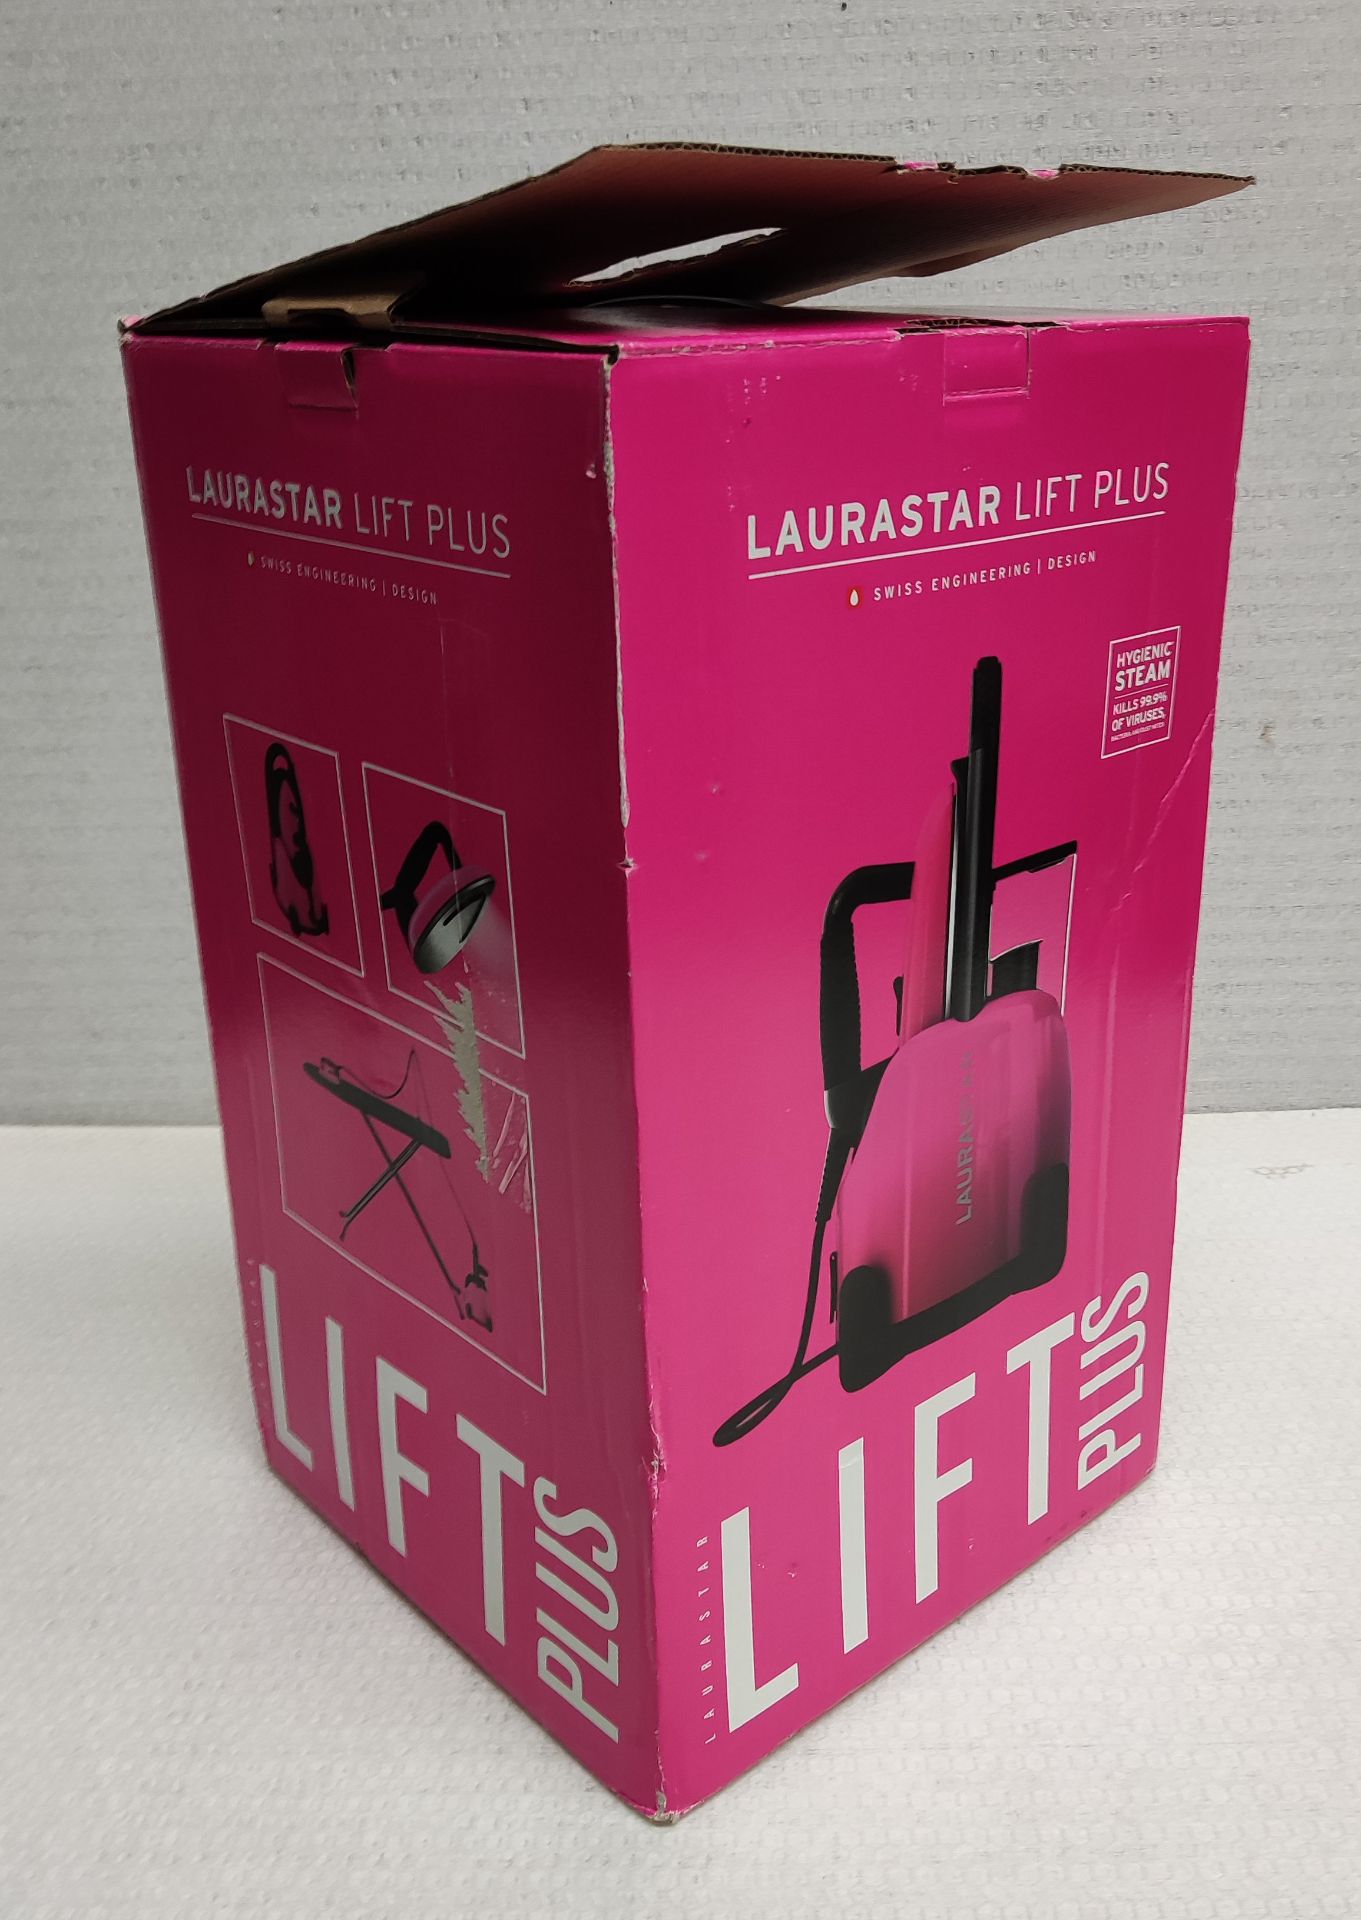 1 x LAURASTAR Lift Plus 'Pinky Pop' Steam Generator - Boxed - Original RRP £419.00 - Ref: 5060934/ - Image 5 of 9